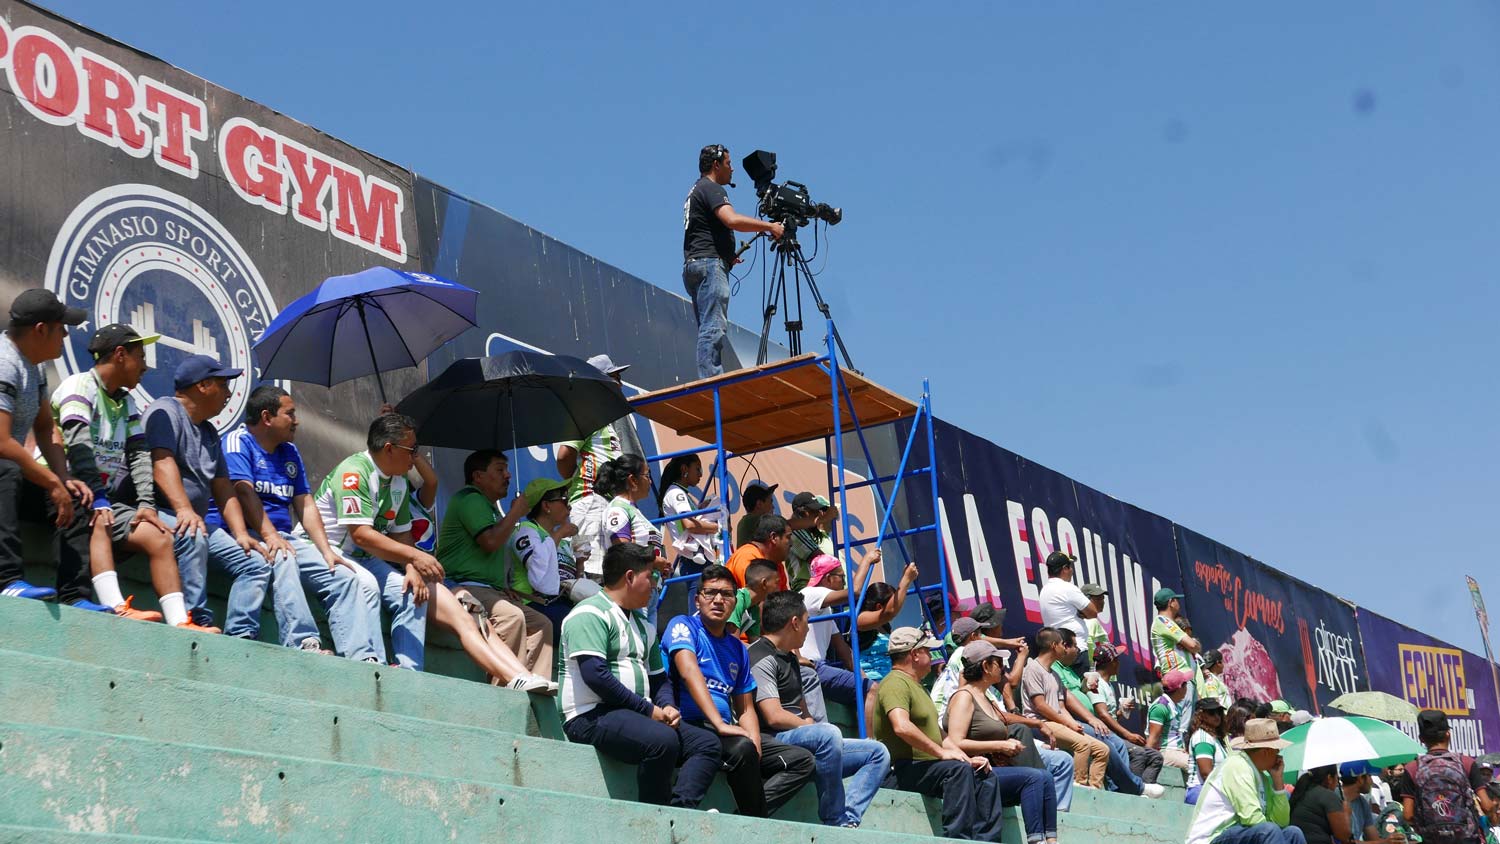 Camera man during football match in Antigua Guatemala